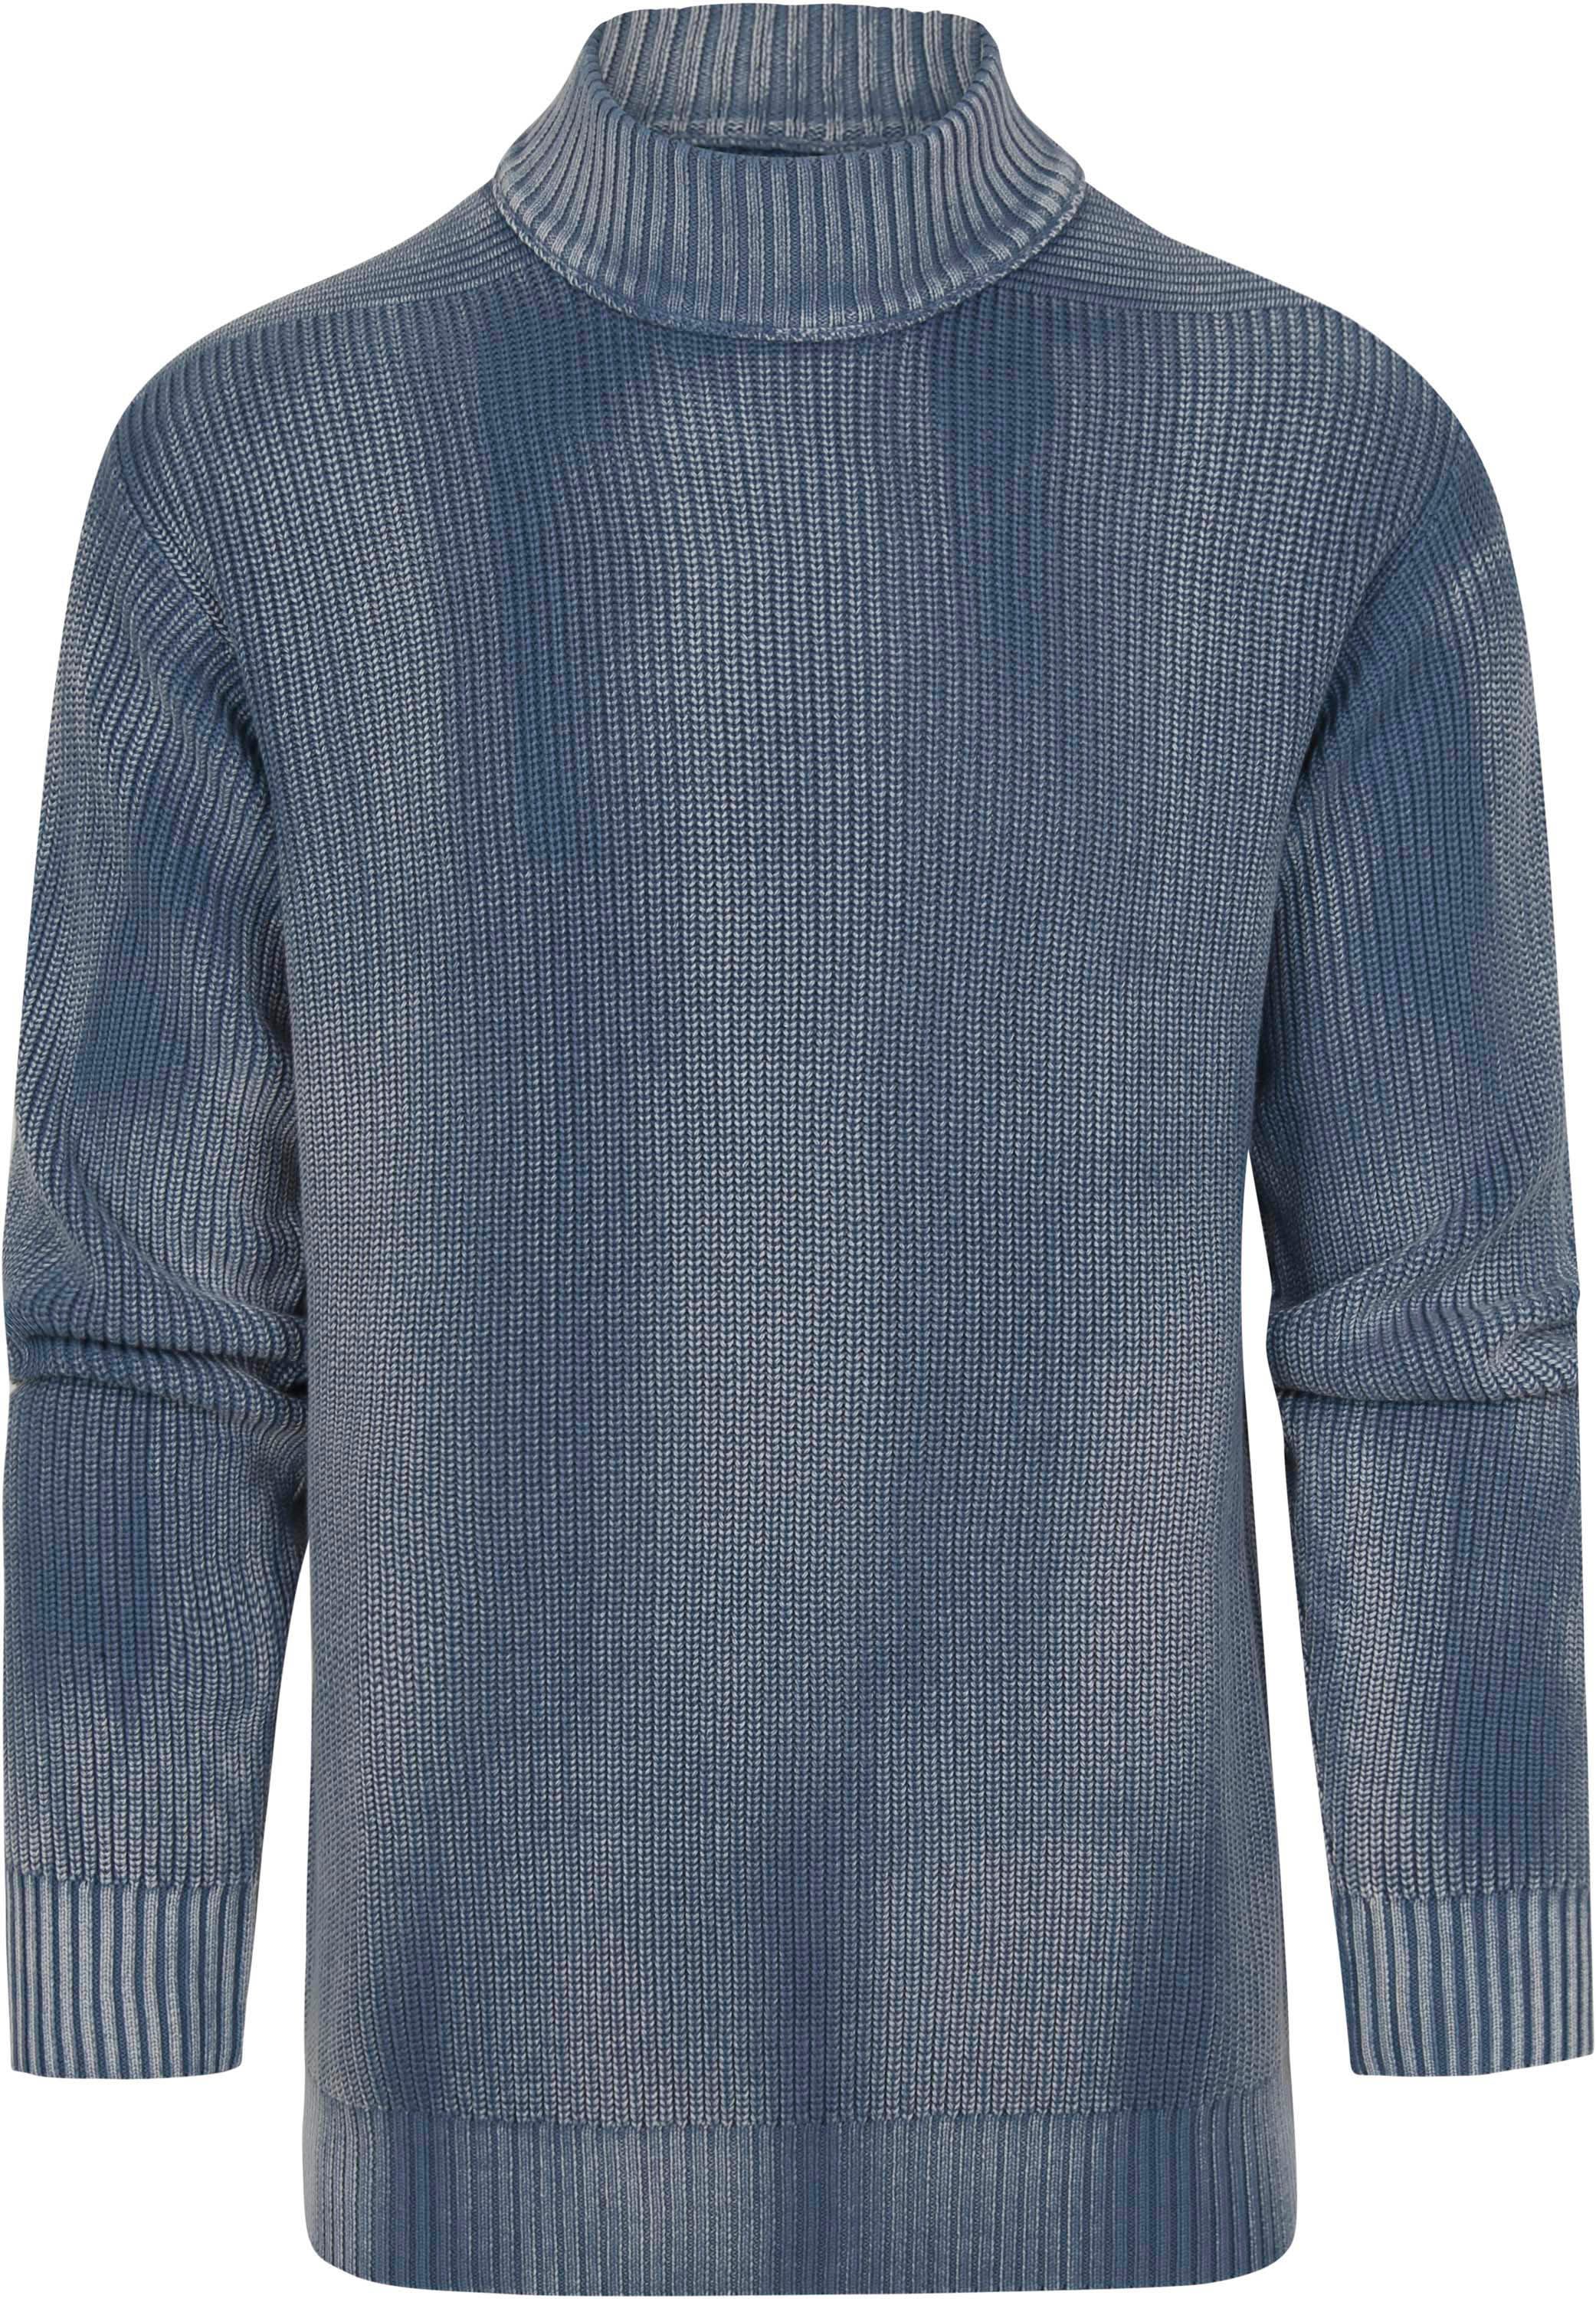 Hugo Boss Sweater Blue size L